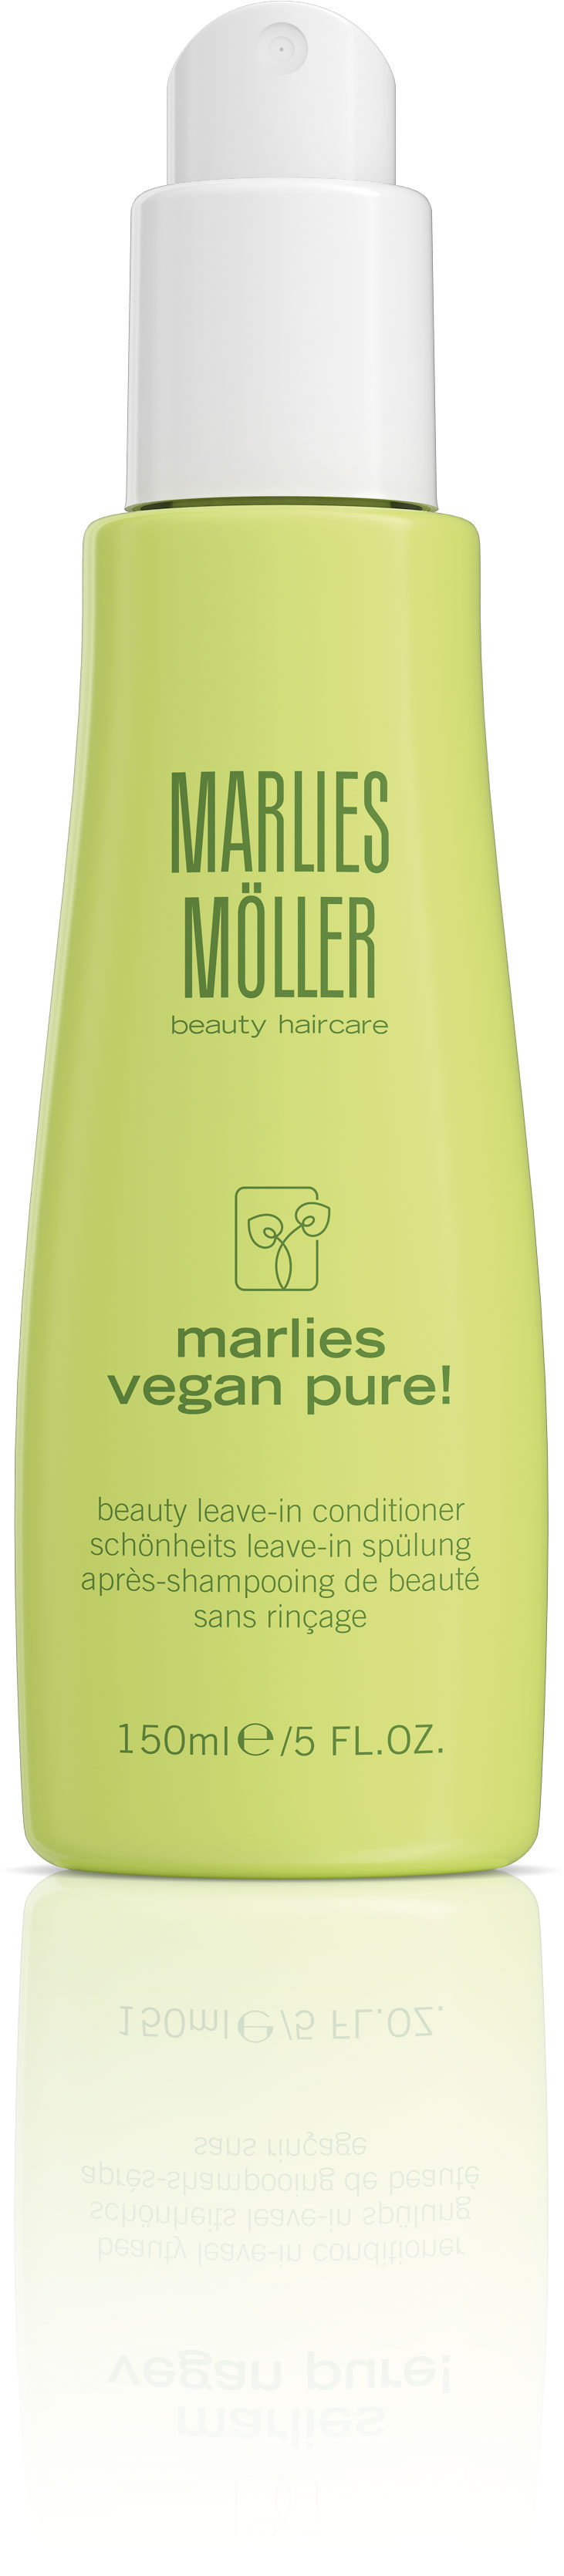 Marlies Möller Vegan Pure Beauty Leave In Condit 150 ml